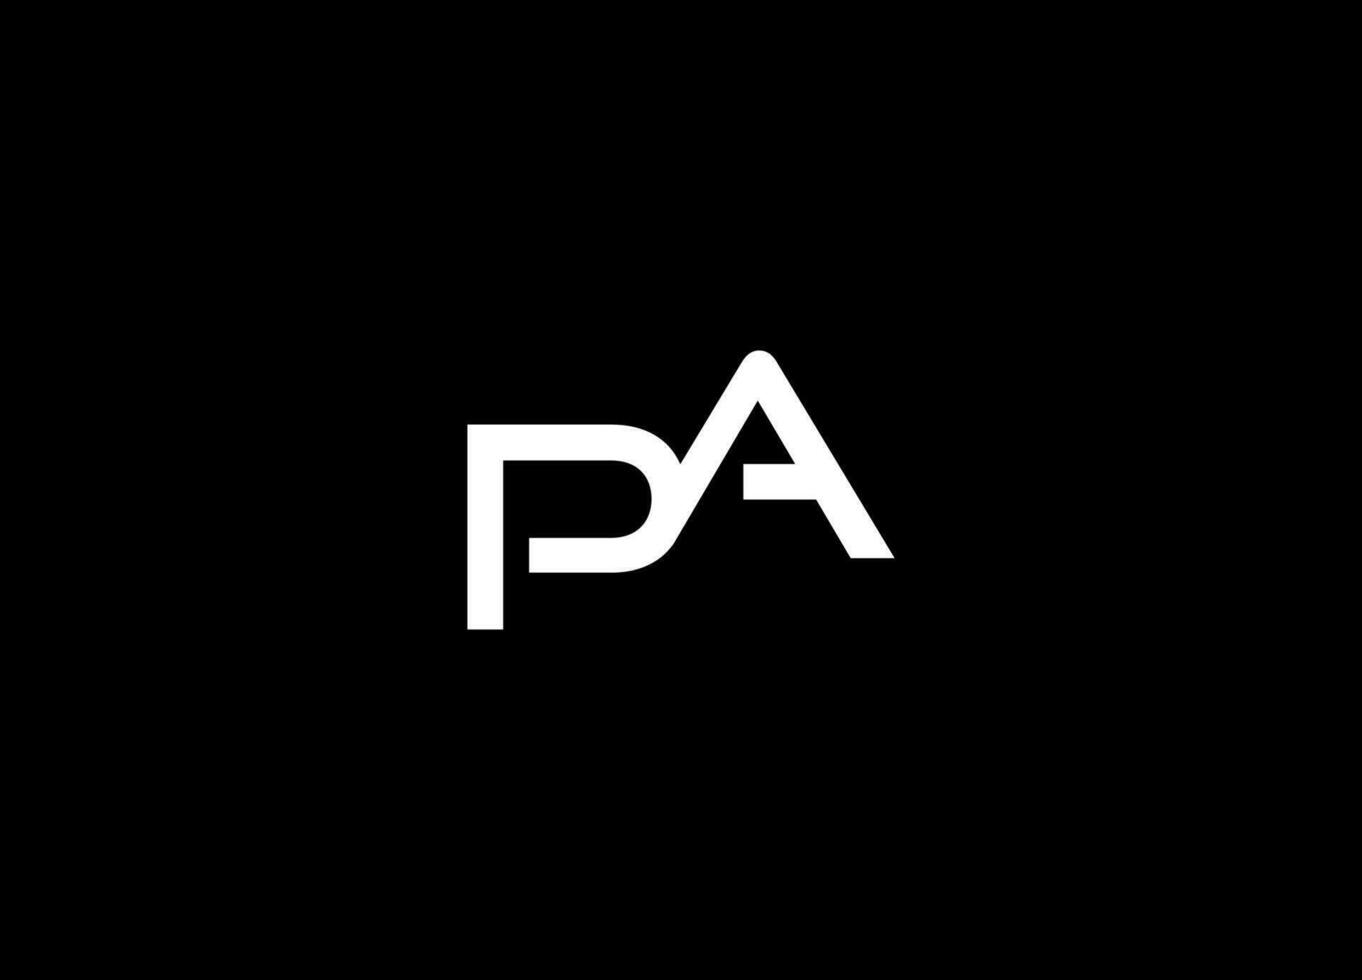 Letter PA logo icon design template elements. Alphabet letter icon logo PA vector